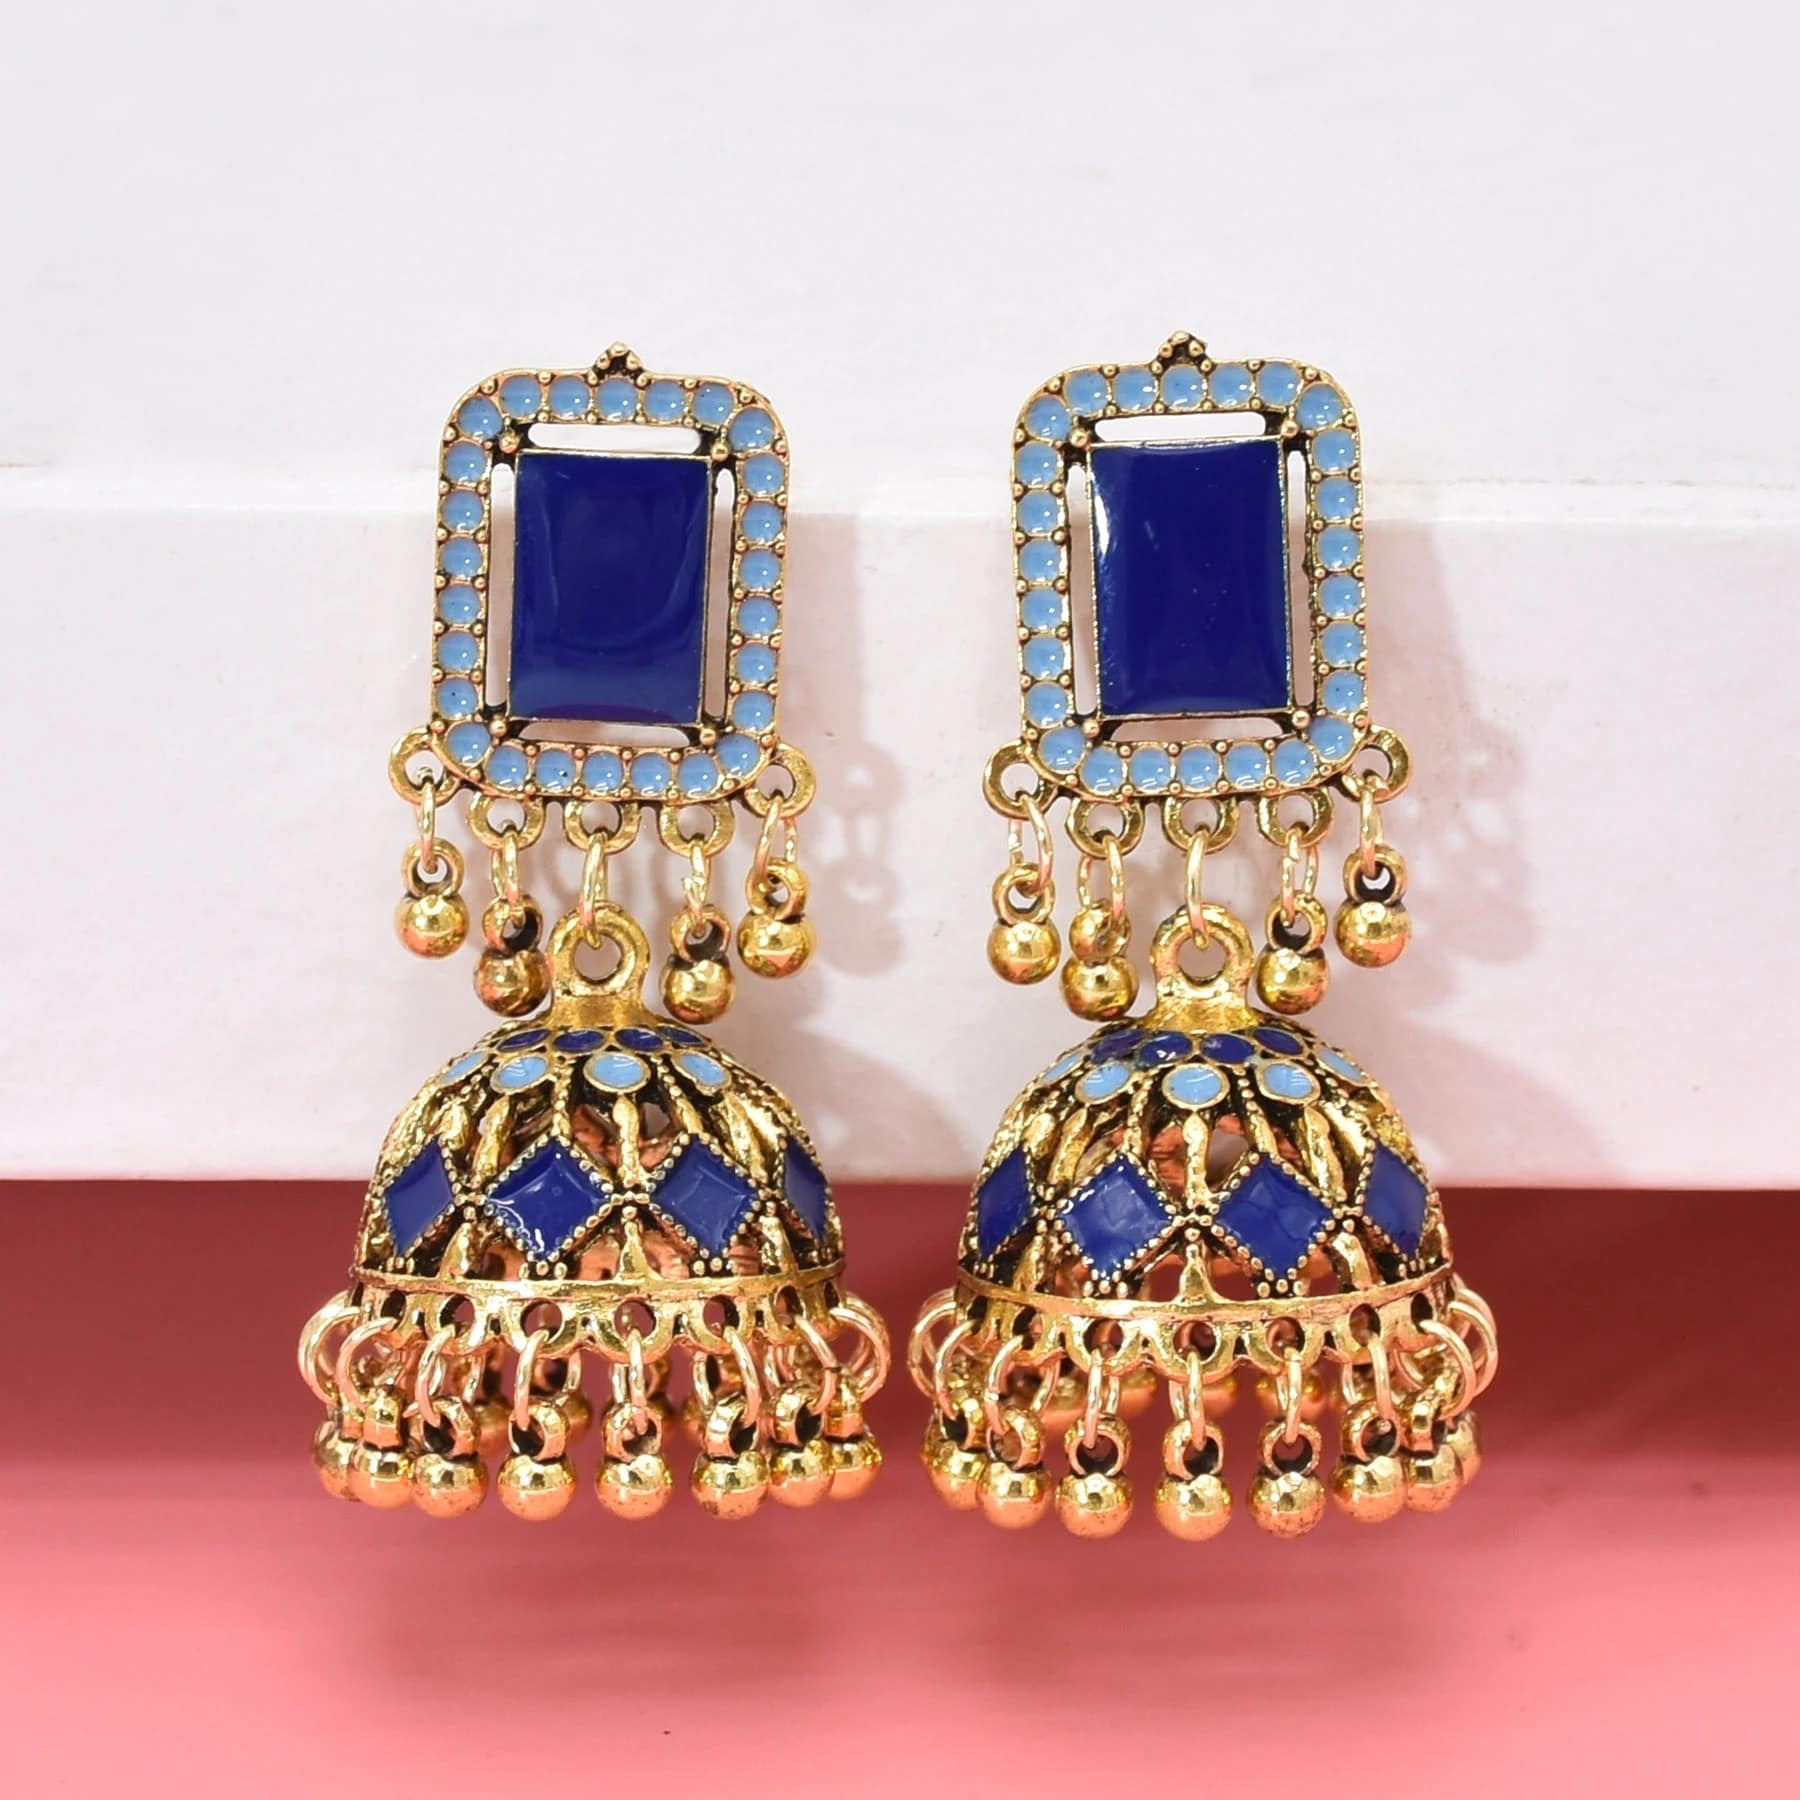 Cercei aurii, stil indian, cu clopotei si pietre albastre, Karen C34